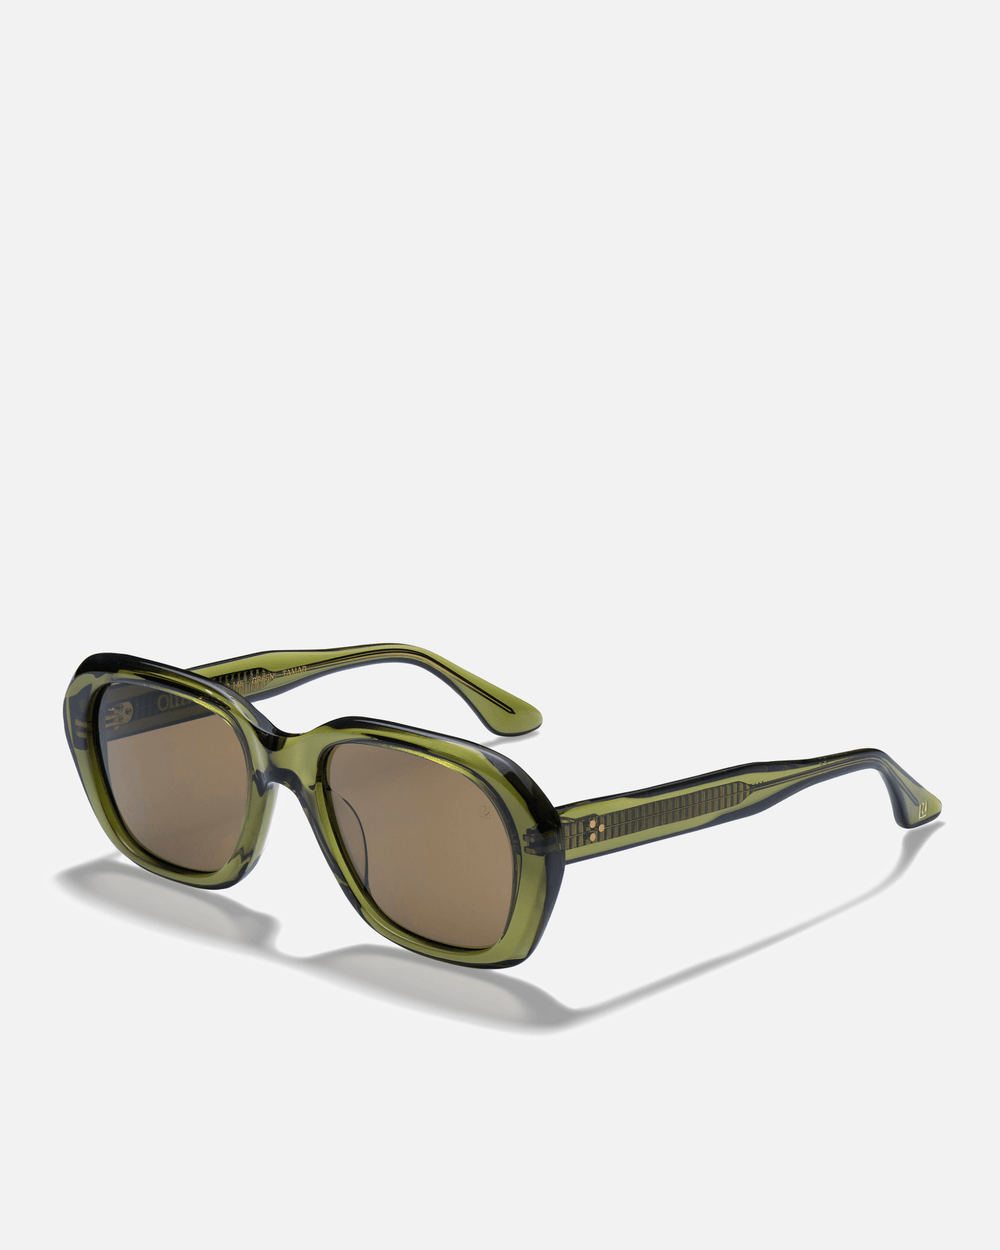 TAMAR Bio-Acetate Round Frame Sunglasses for Men & Women | Green | Sunnies Collection | OLLU